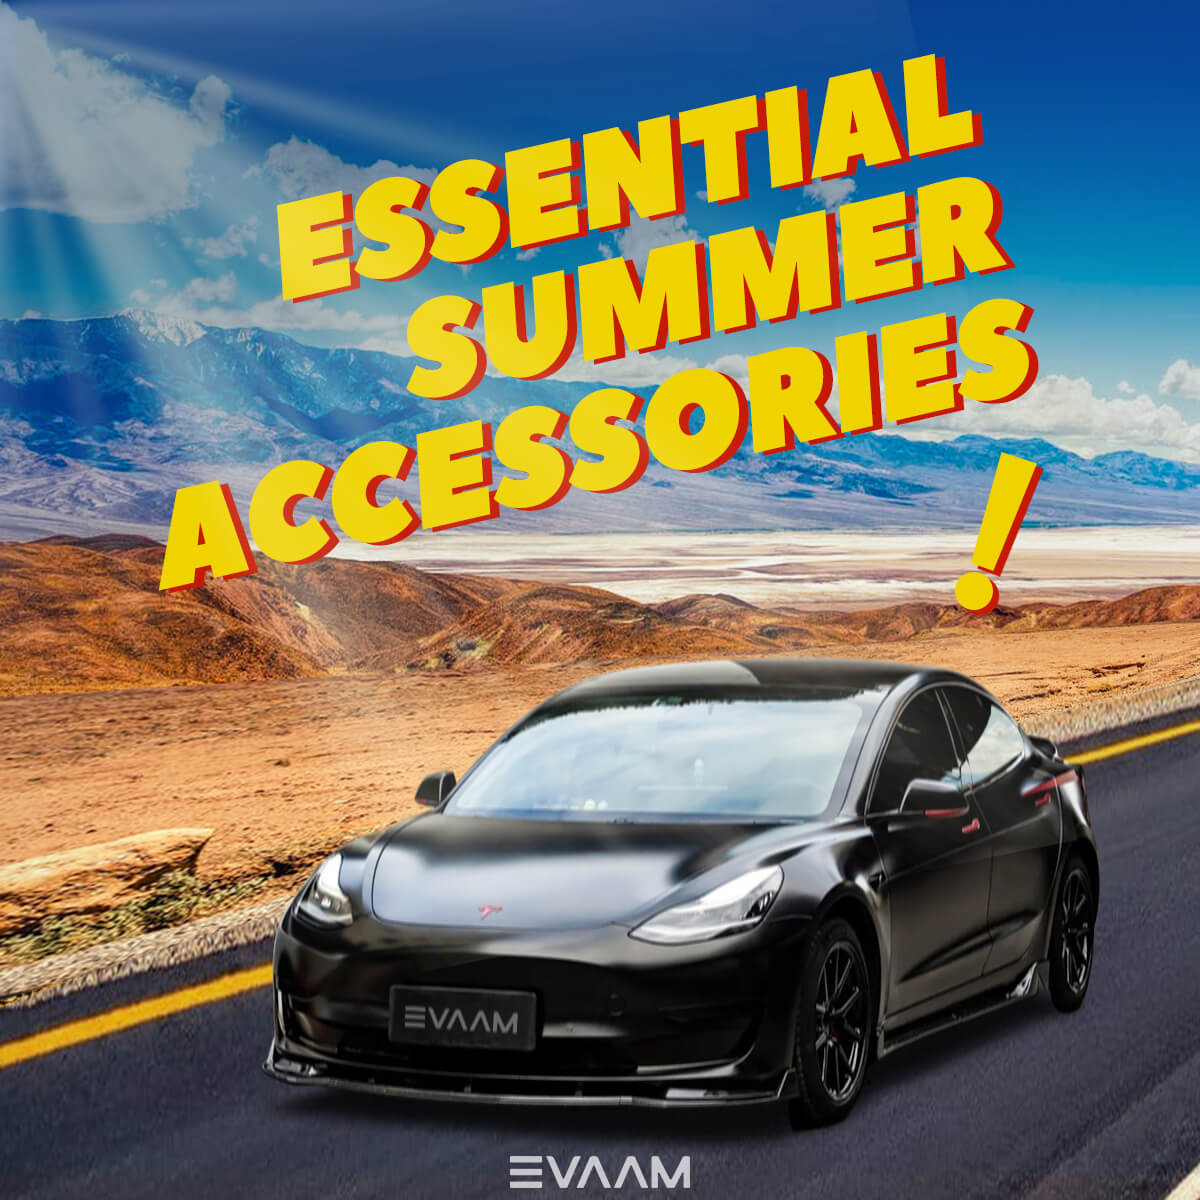 Essential Summer Accessories - EVAAM